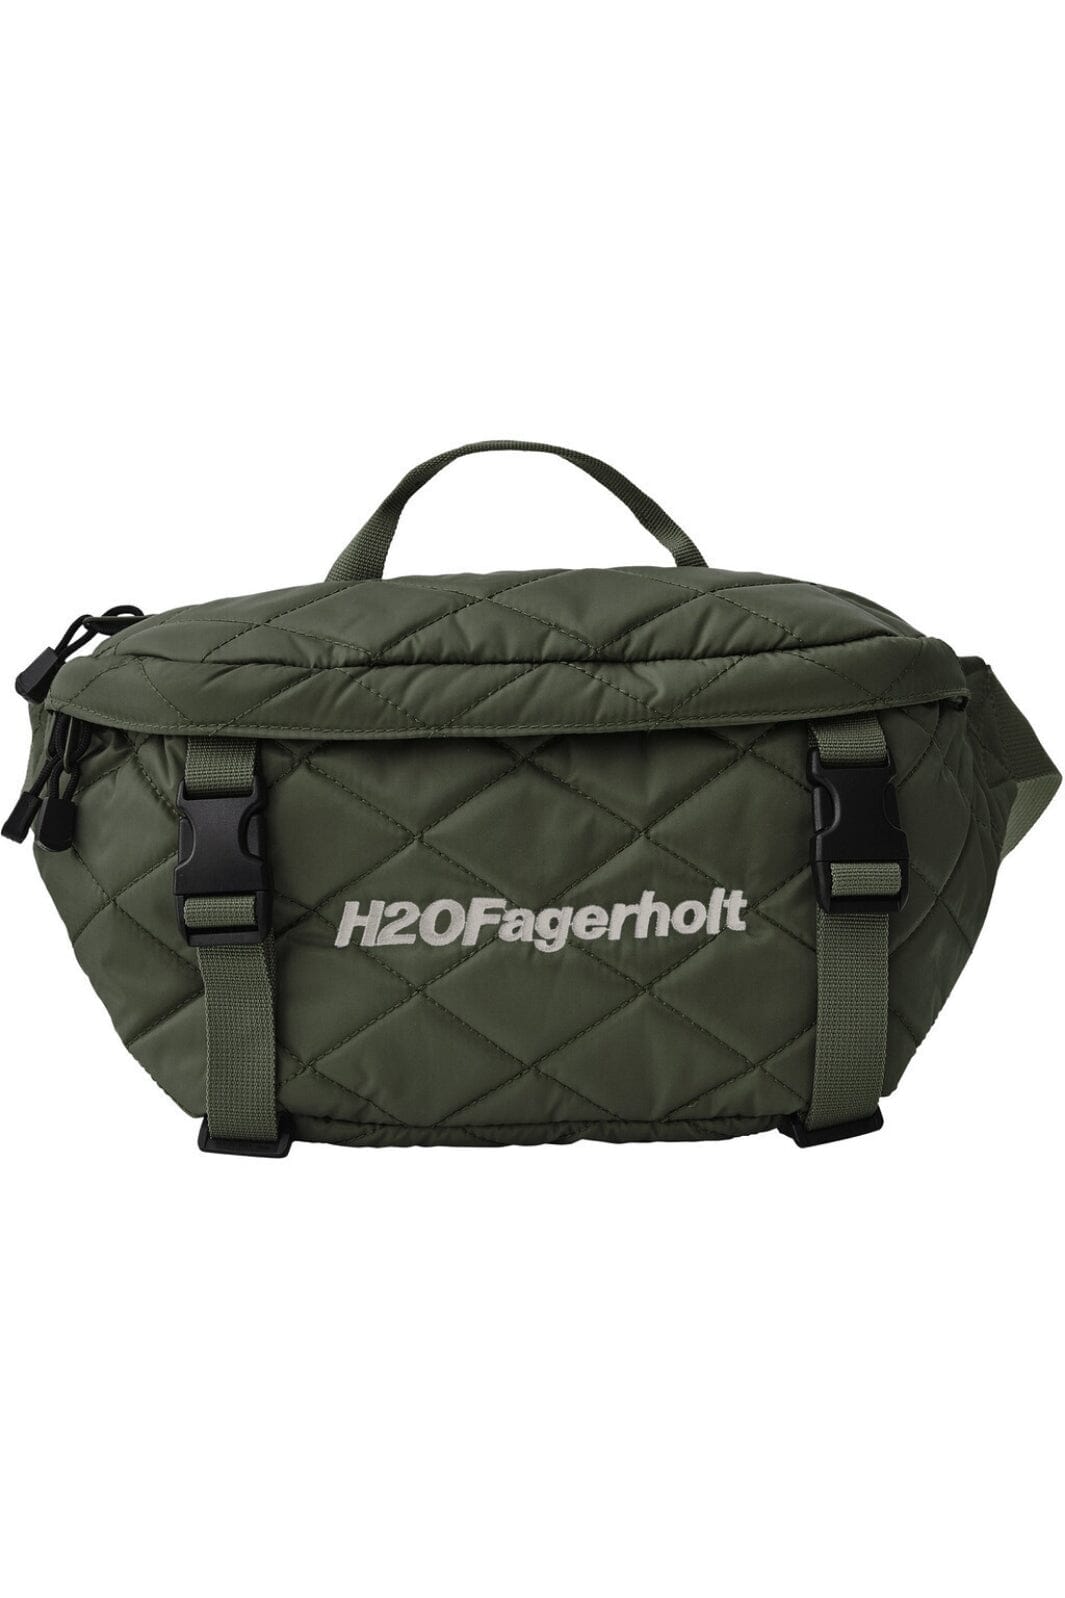 H2O Fagerholt - Close Market Bag - 3562 Khaki Tasker 